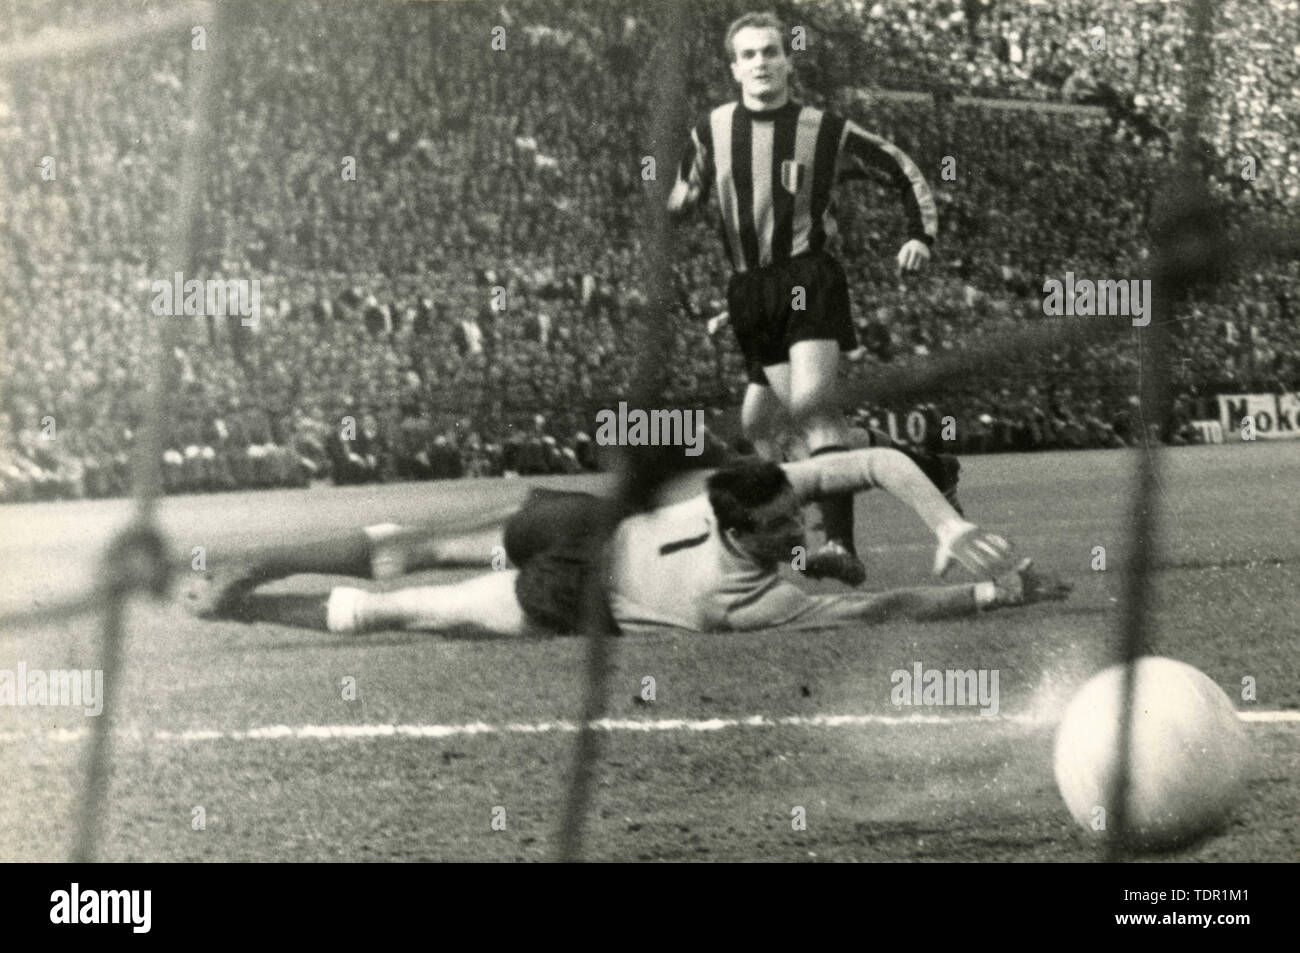 Italian football player Sandro Mazzola scores his first goal, 1964 Stock Photo